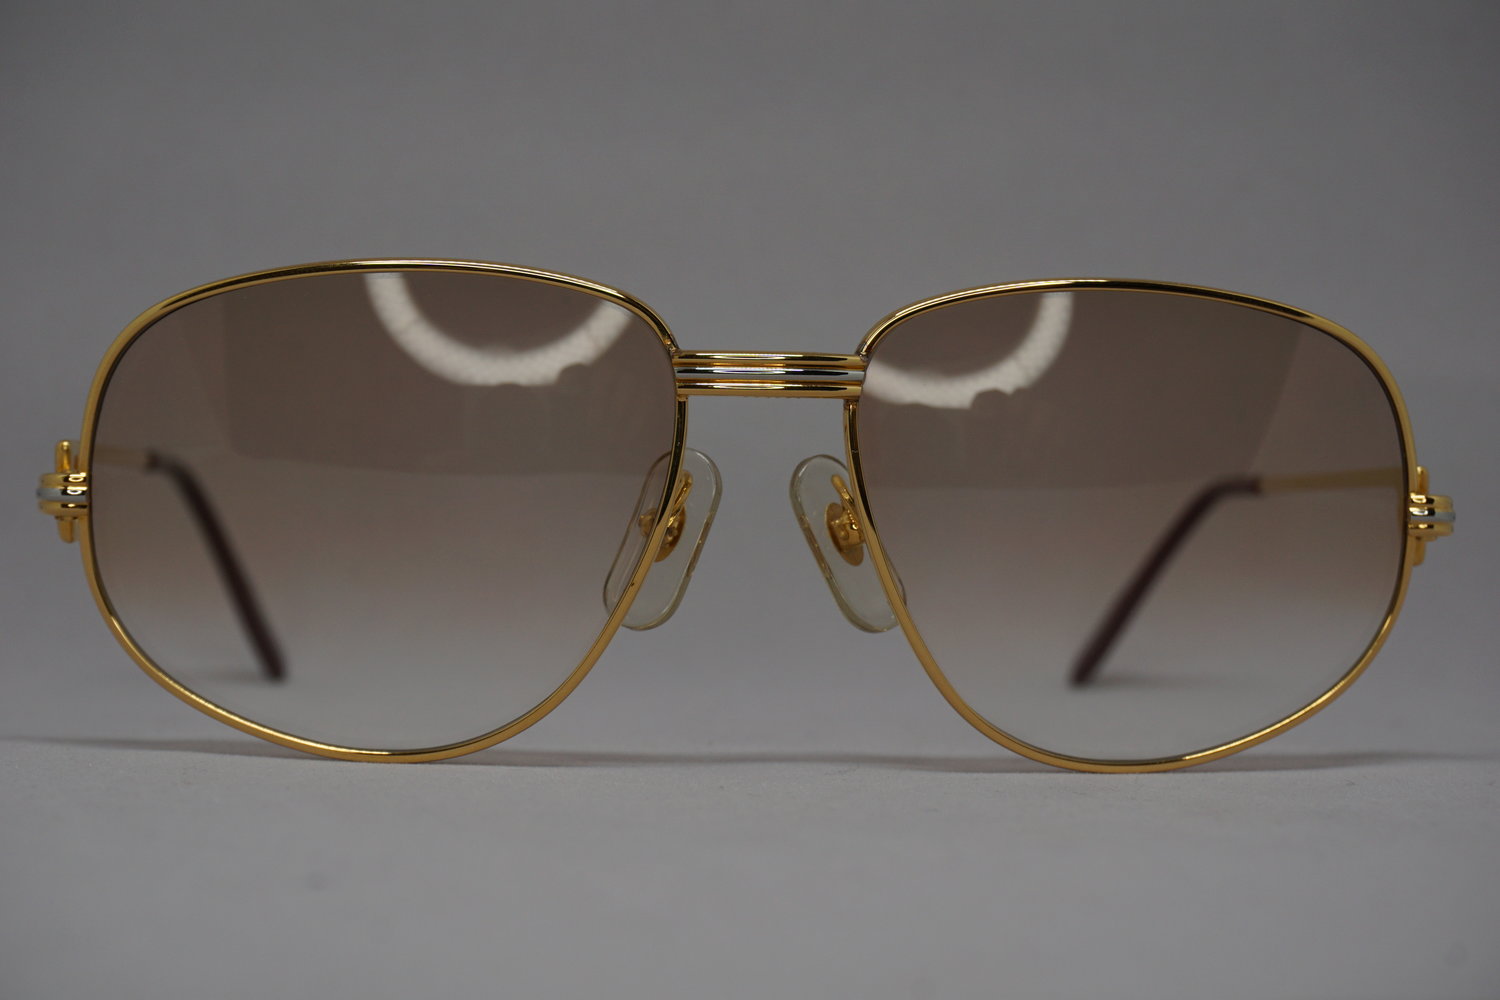 Sunglasses Cartier Romance LC - L Luxury Shades Chanel Case